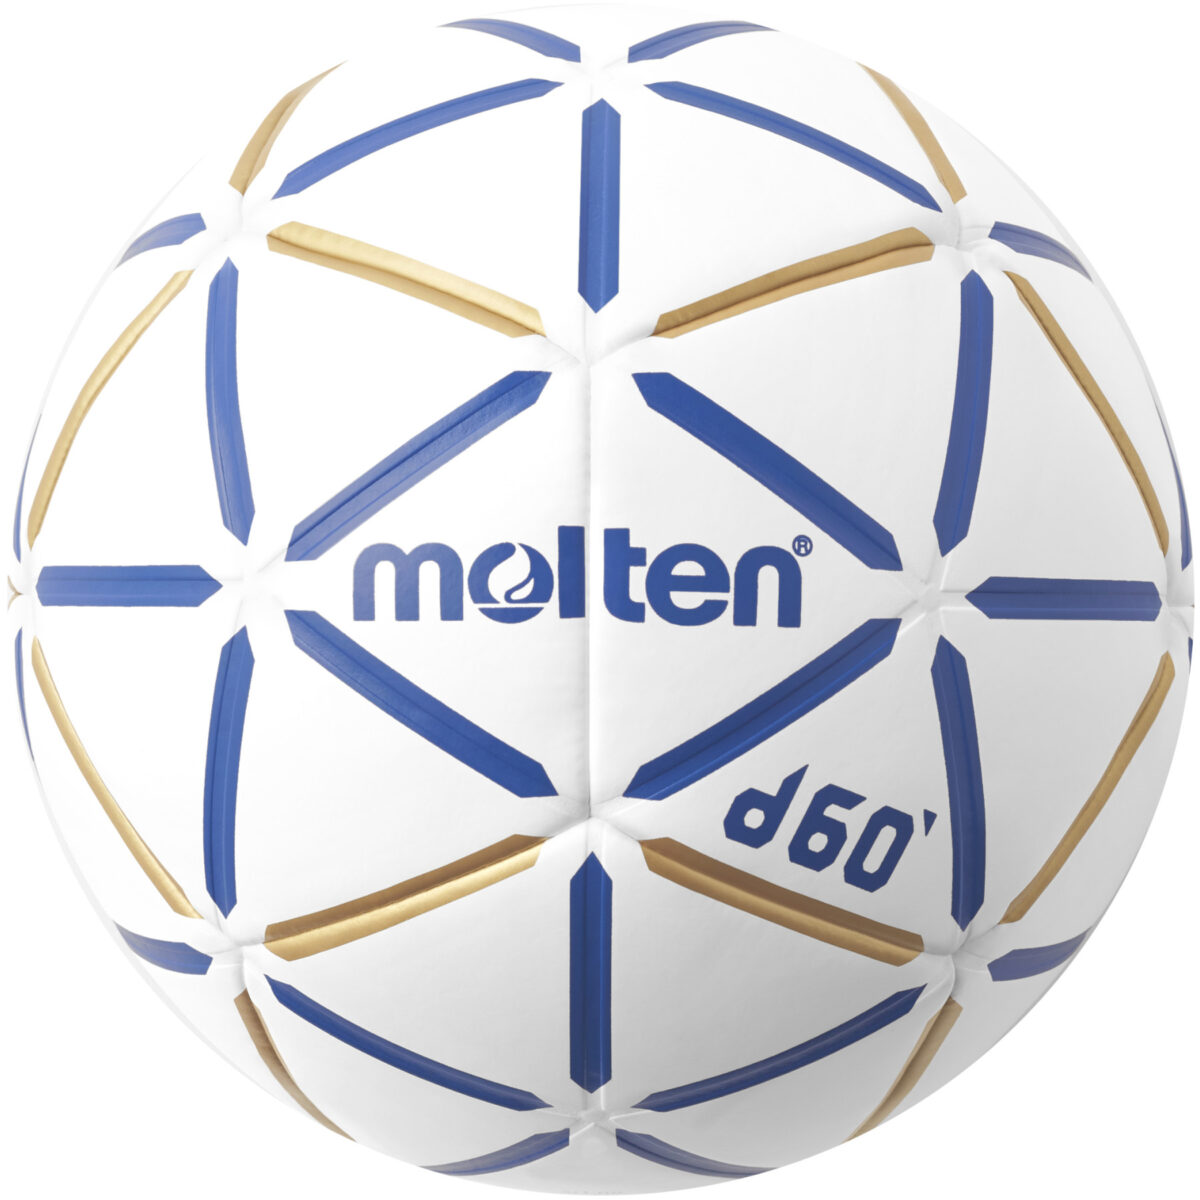 molten-D60-001-scaled-1.jpg